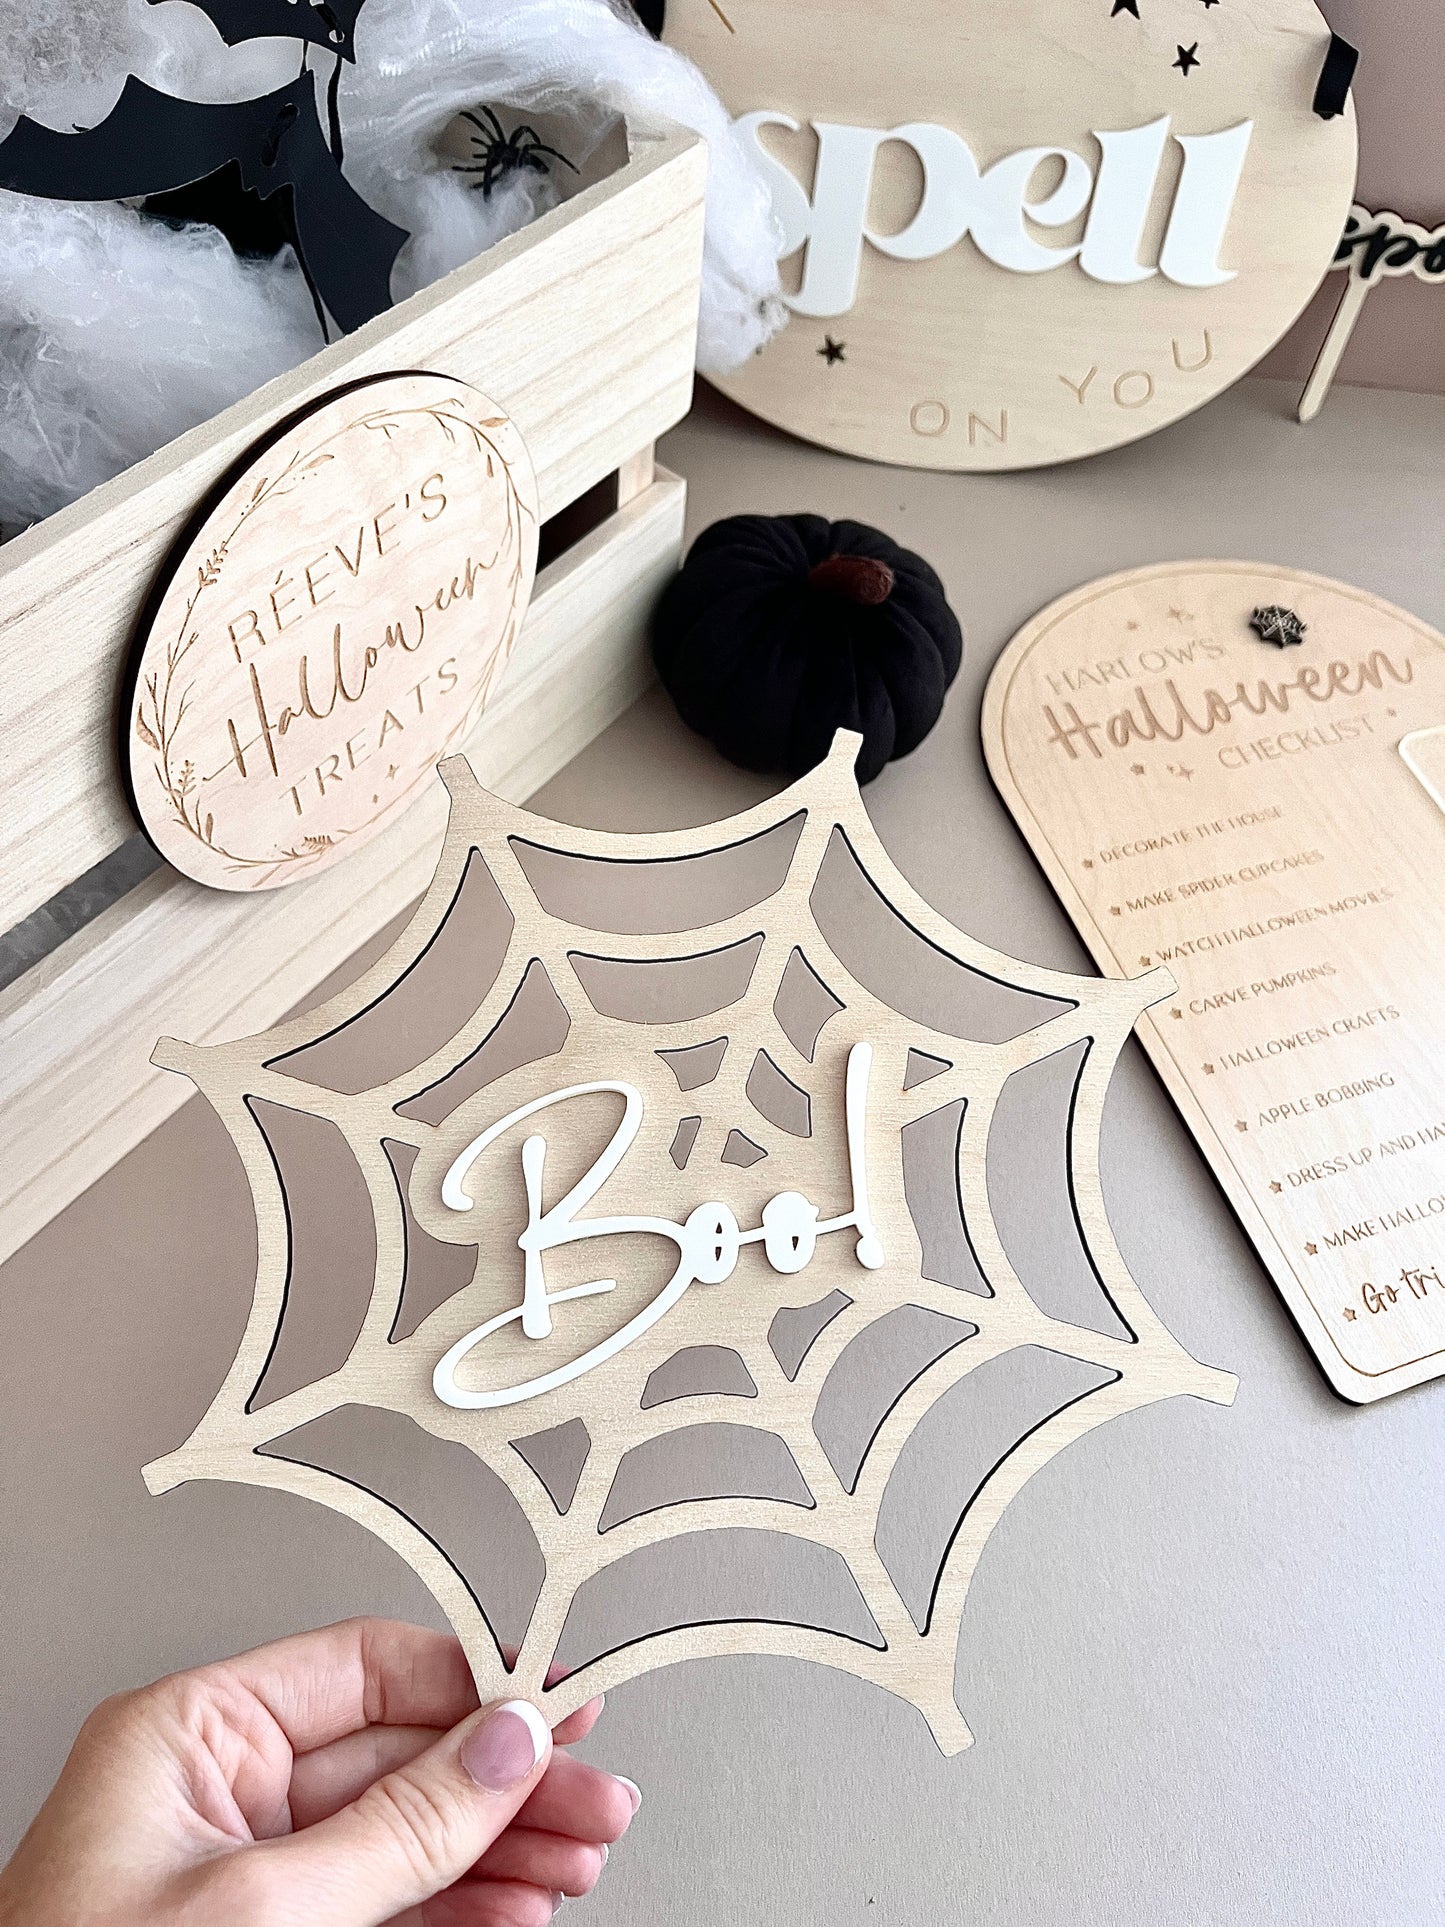 Boo! Cobweb plaque, wooden Halloween decor